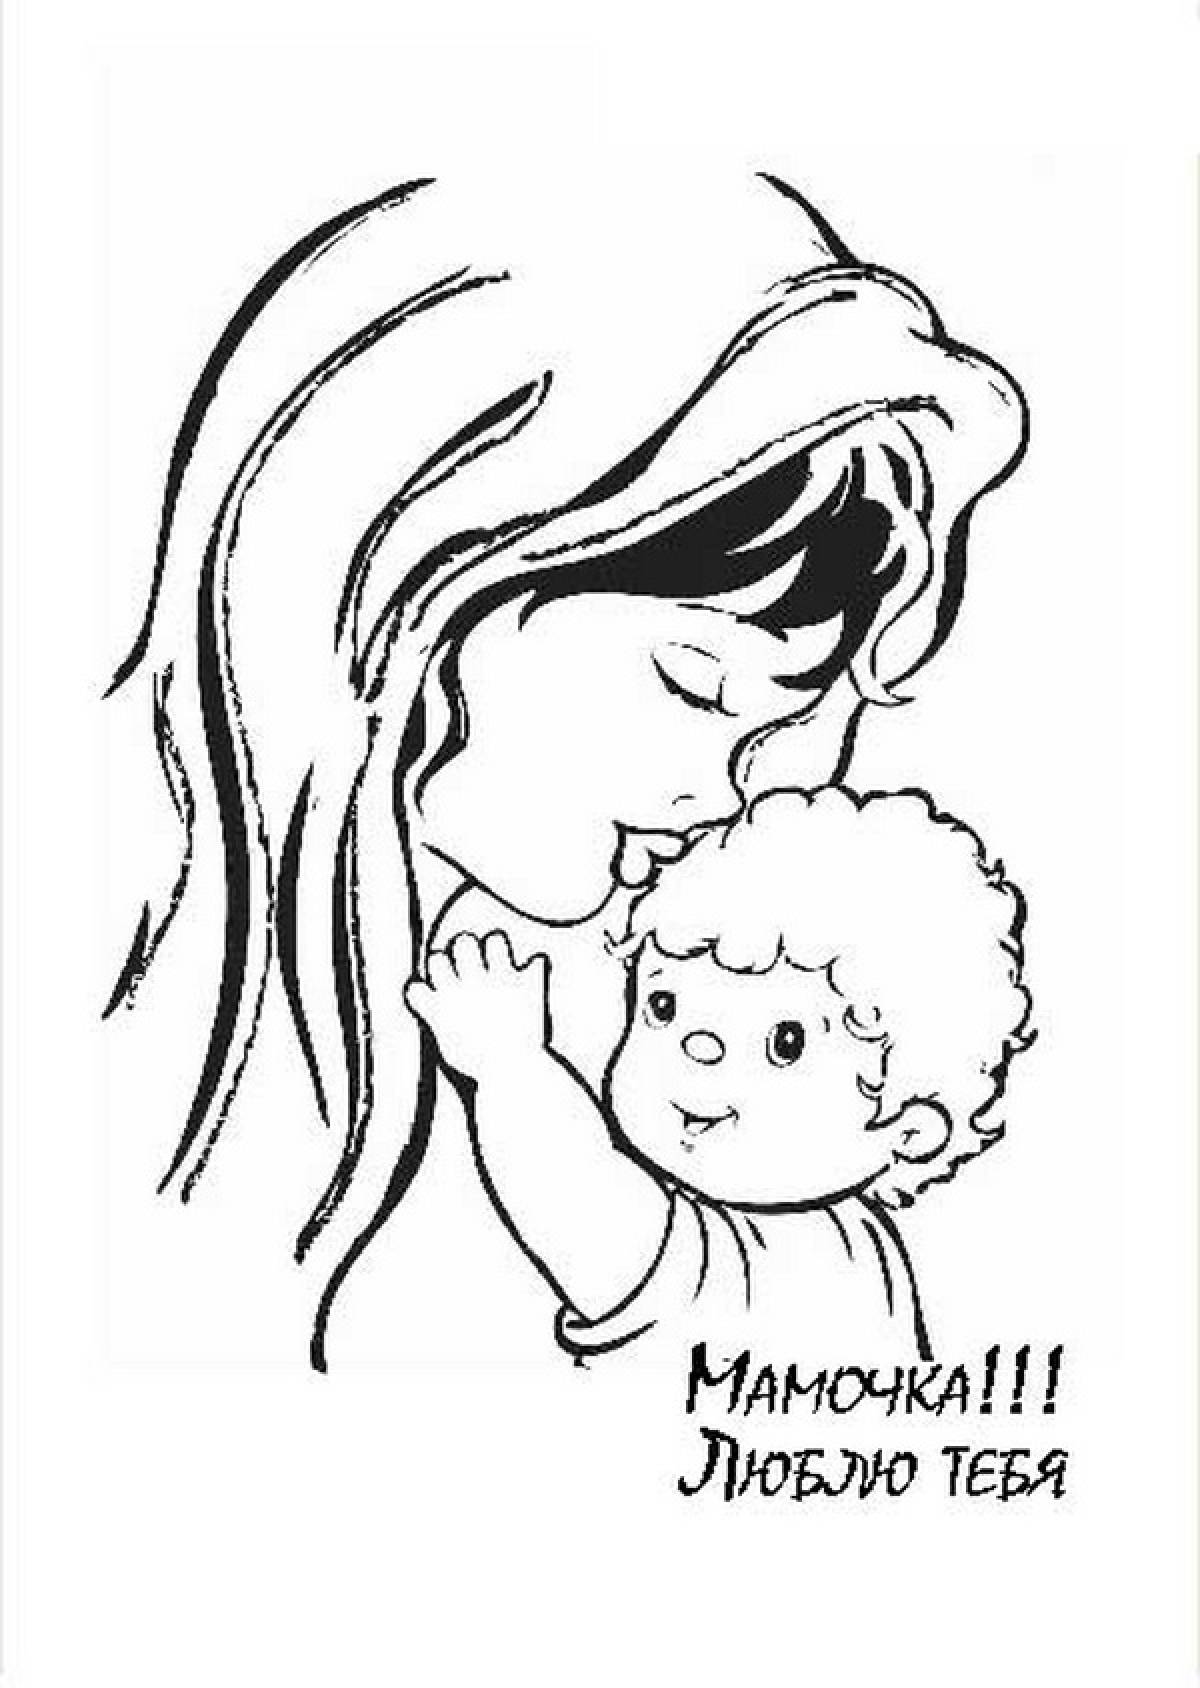 Рисунки мама с ребенком на день матери